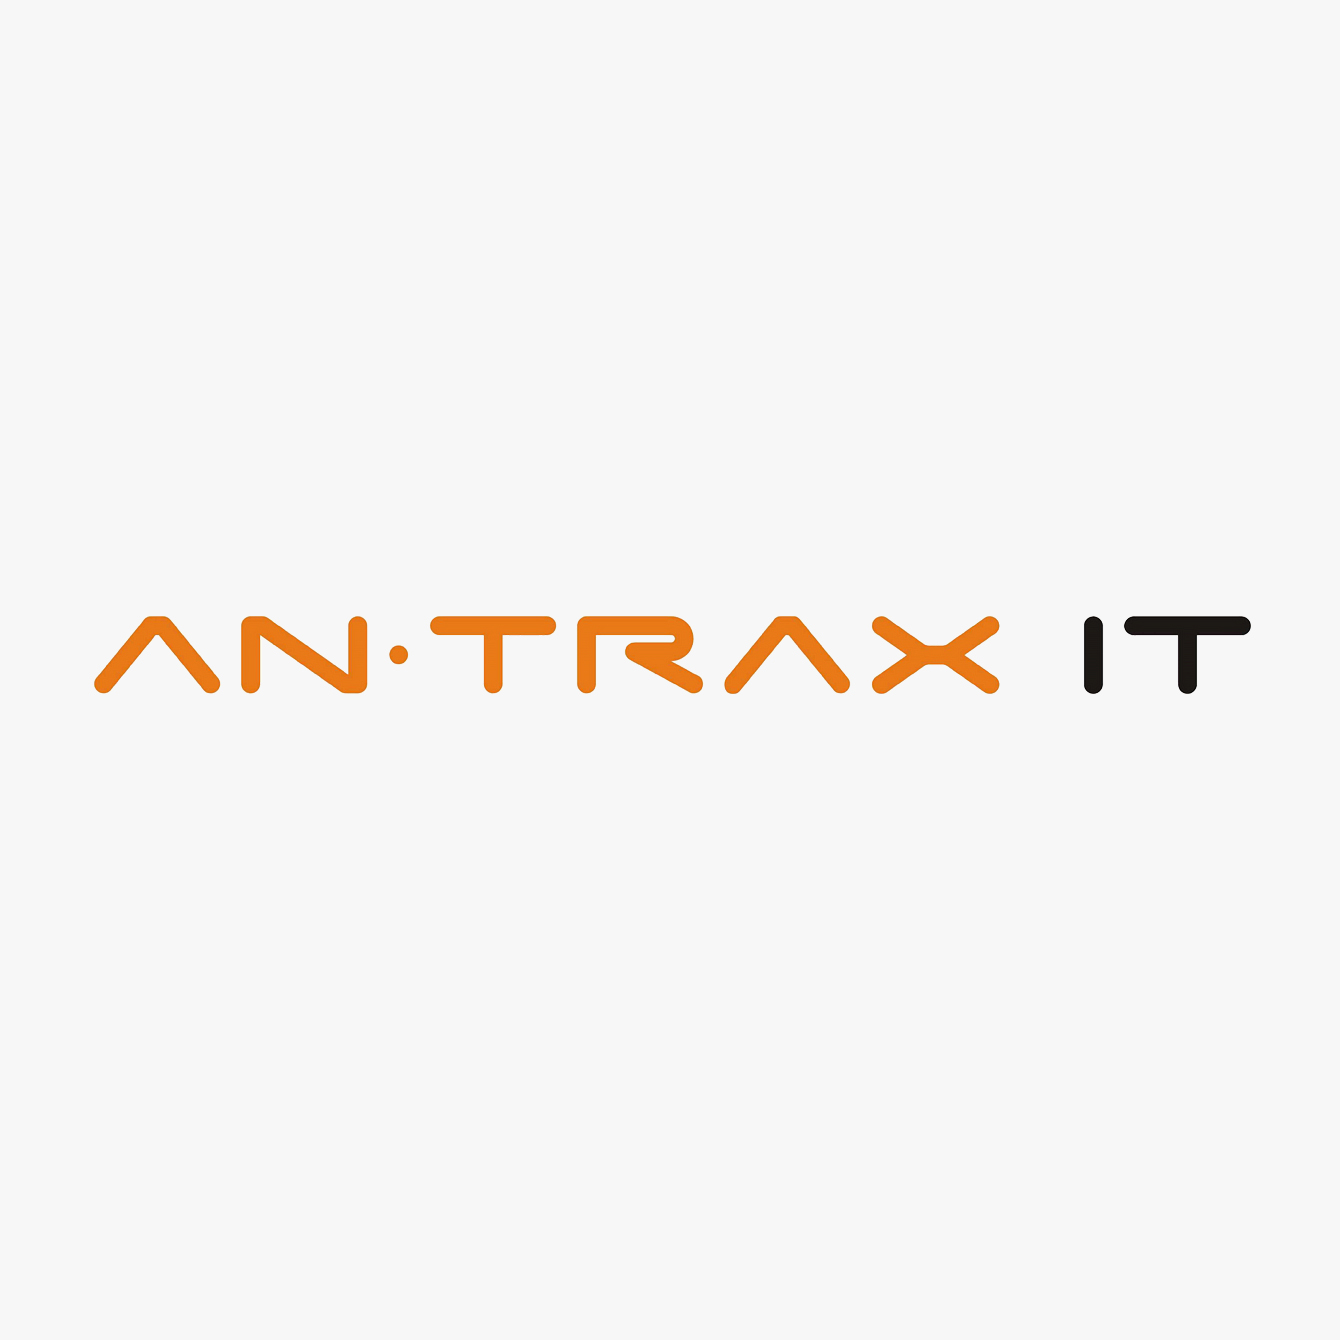 Android O - Moderne ANTRAX IT Designheizung von Daniel Libeskind | Radiamo